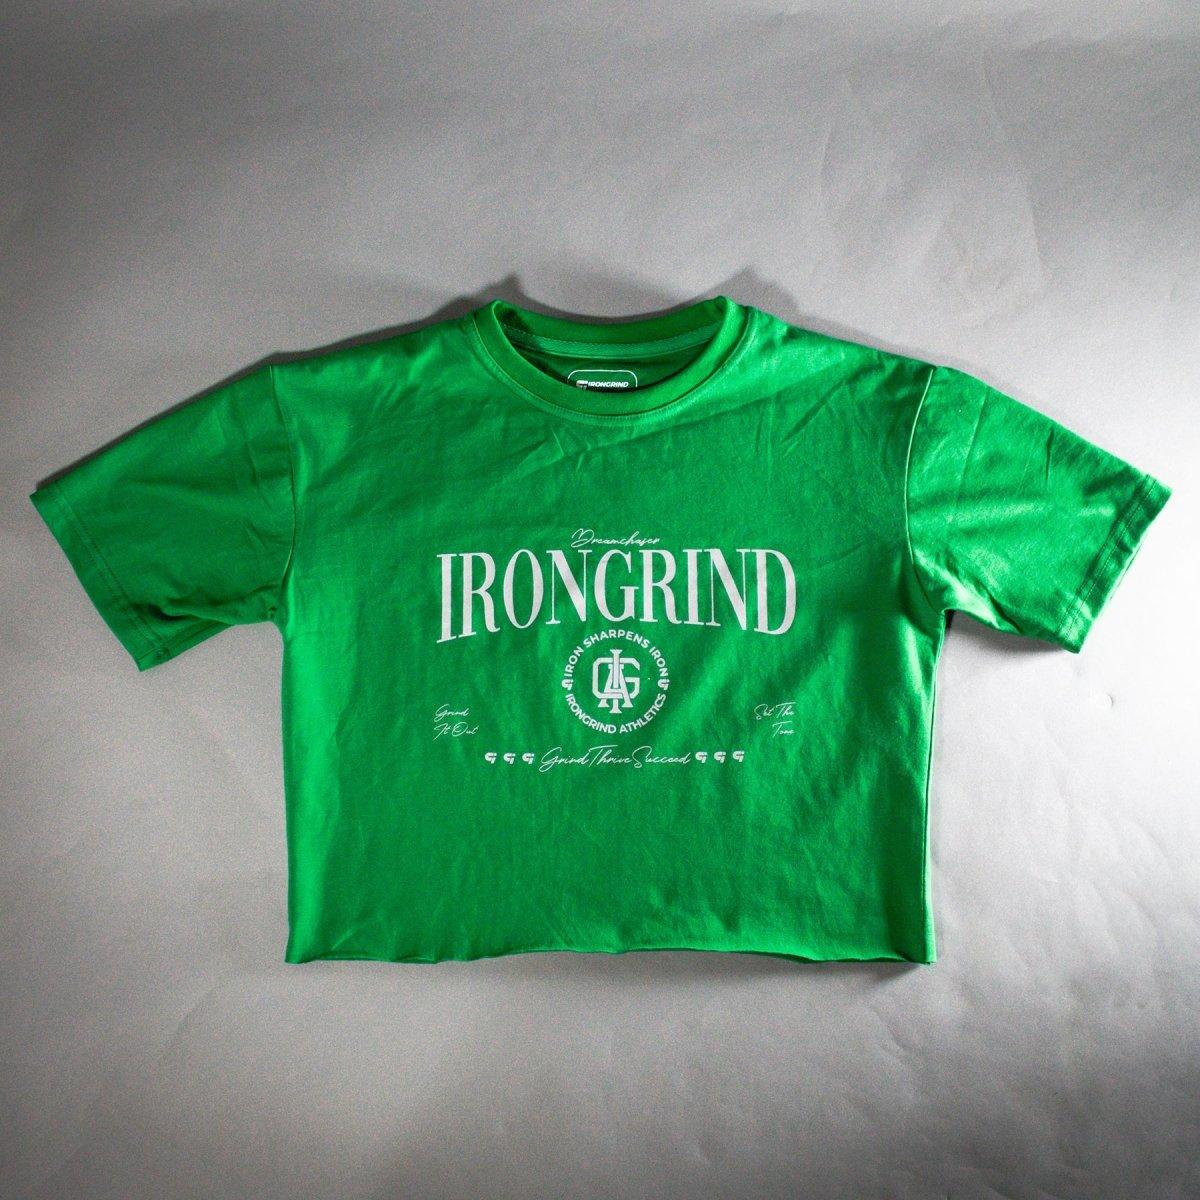 Incarnate Vintage Crop Top - Green - IronGrind Athletics - activewear - gymshark - alphalete